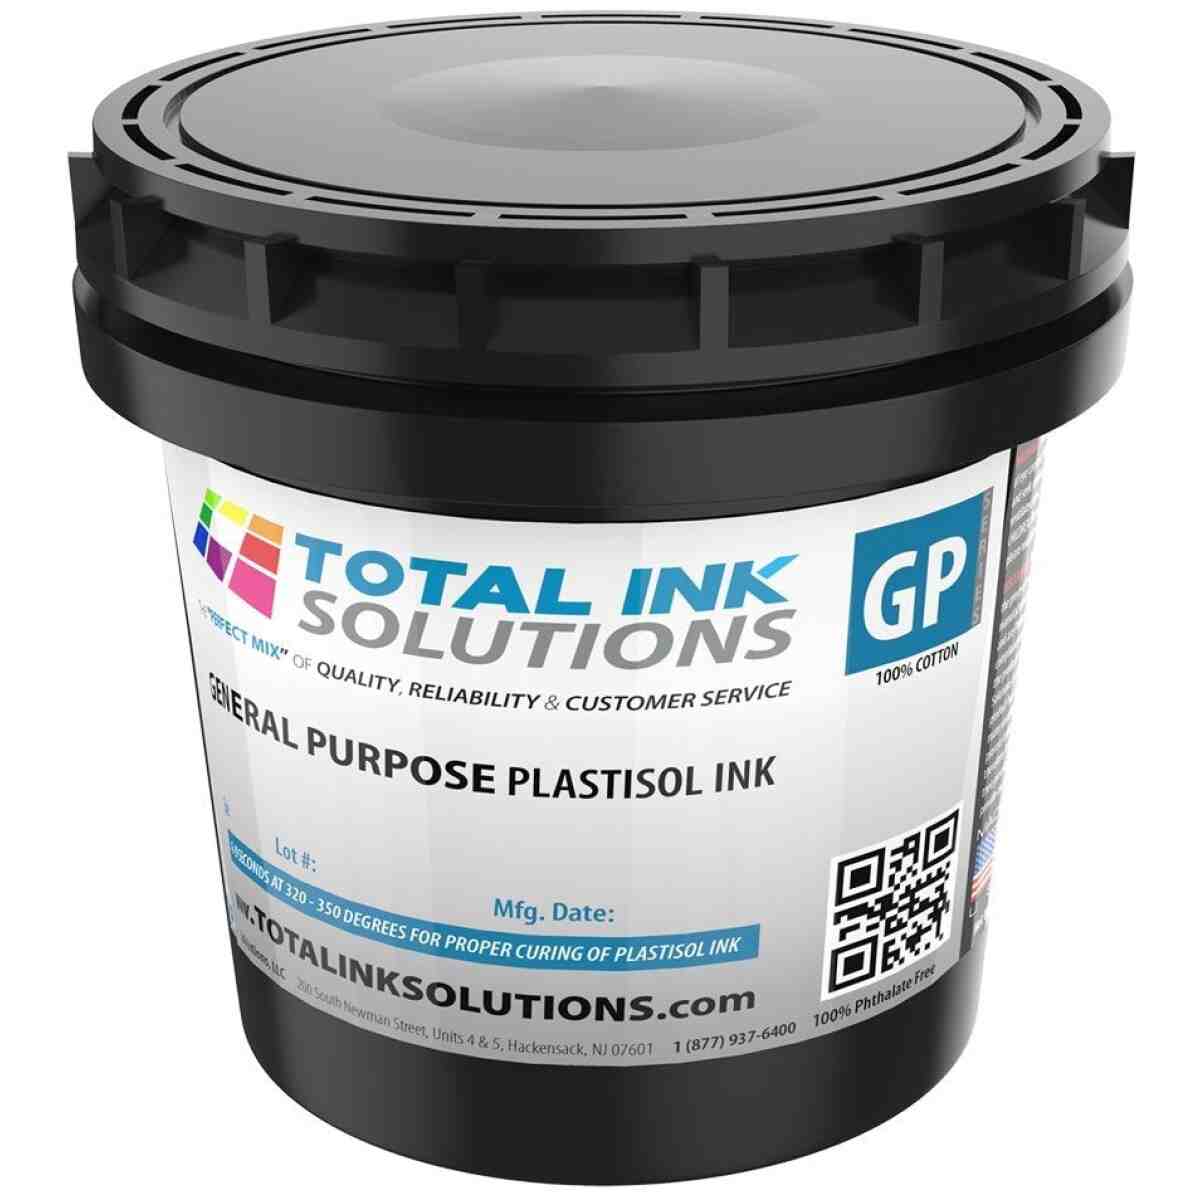 Predator Series Plastisol Ink - Quart TOTAL INK SOLUTIONS®